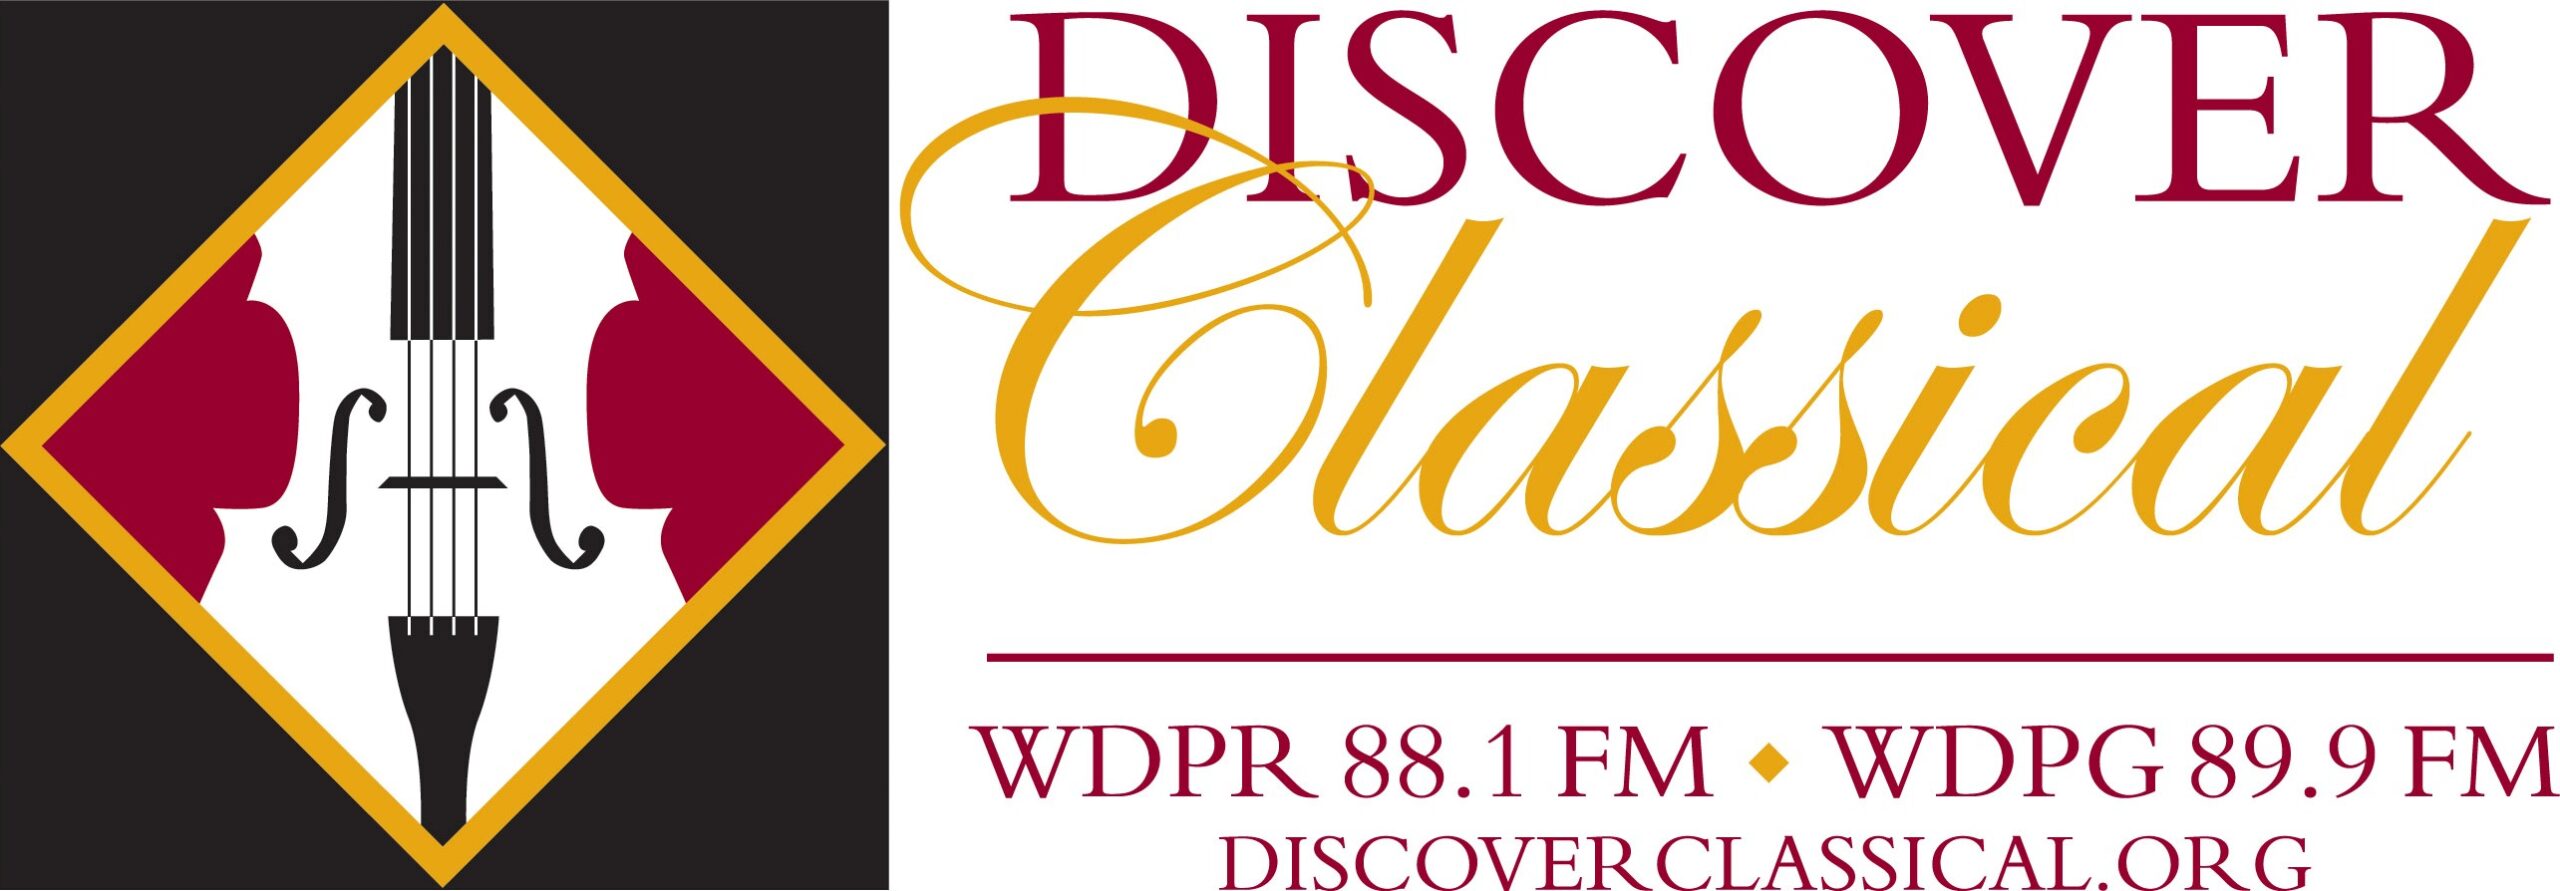 Discover Classical/WDPR-FM/WDPG-FM logo